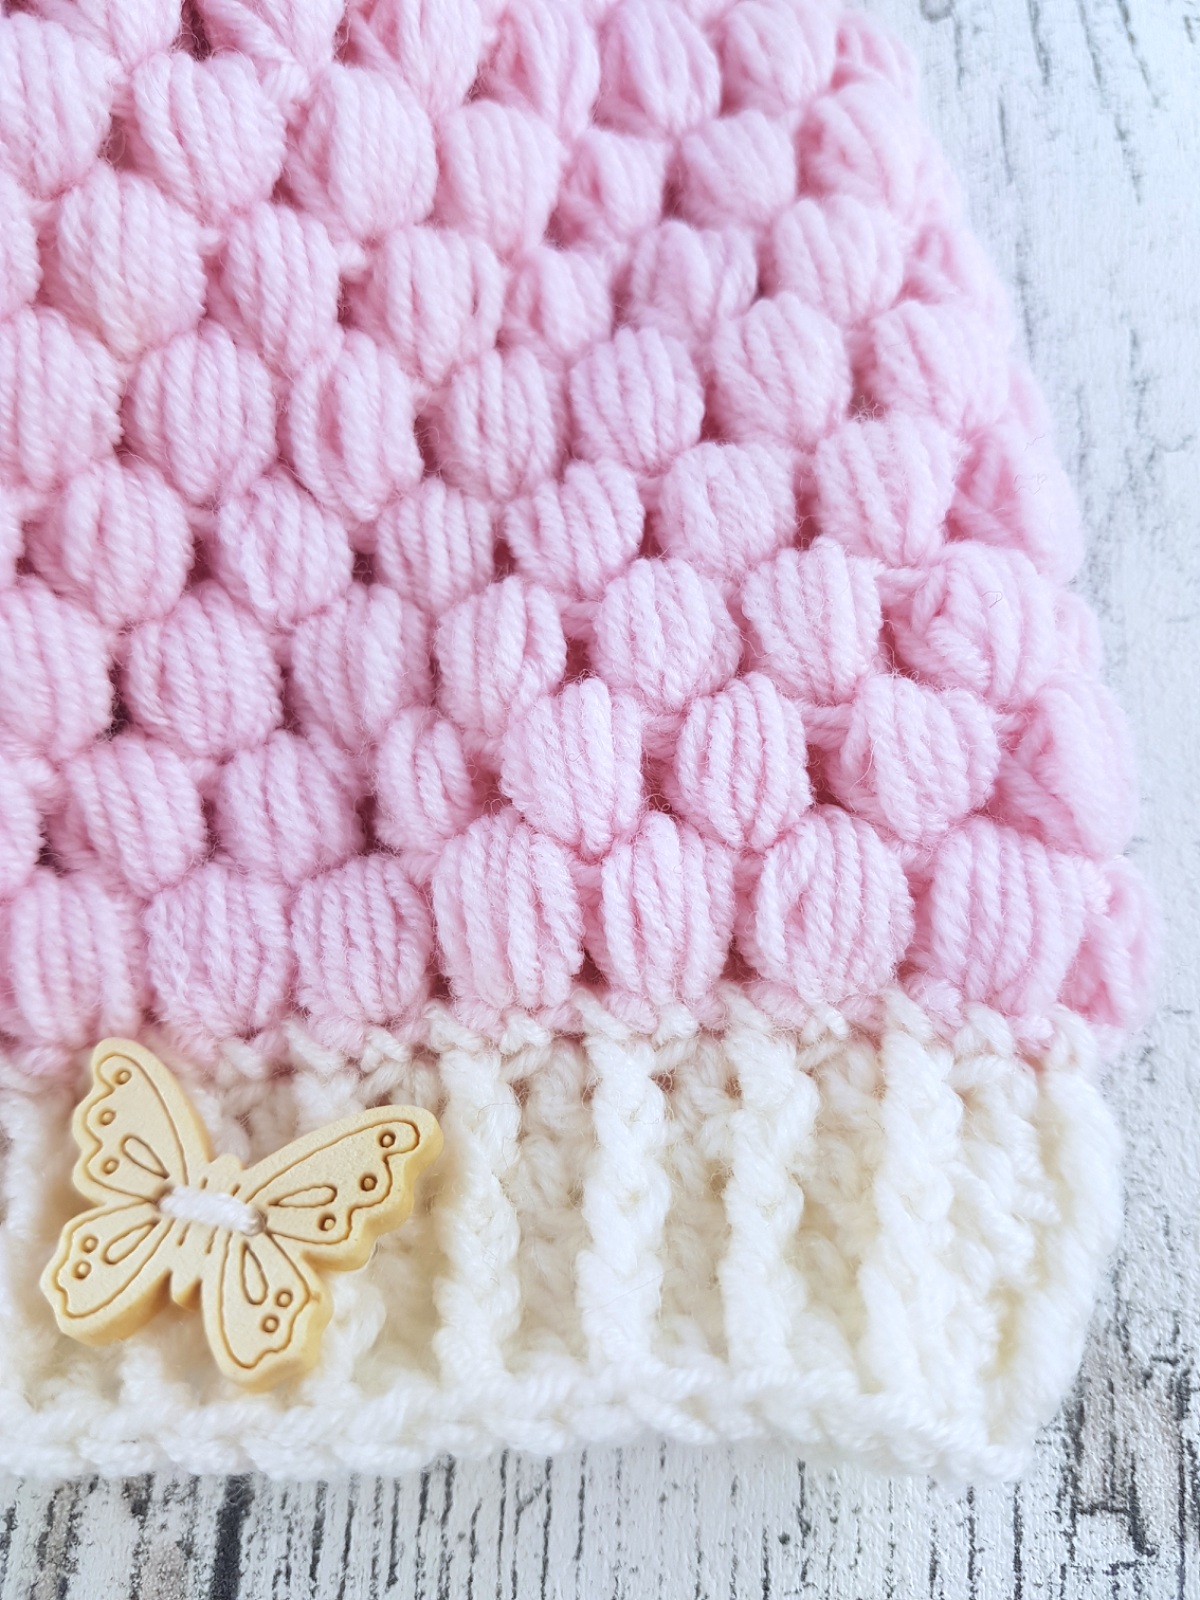 Crochet Hat-Pink With White Pom Pom